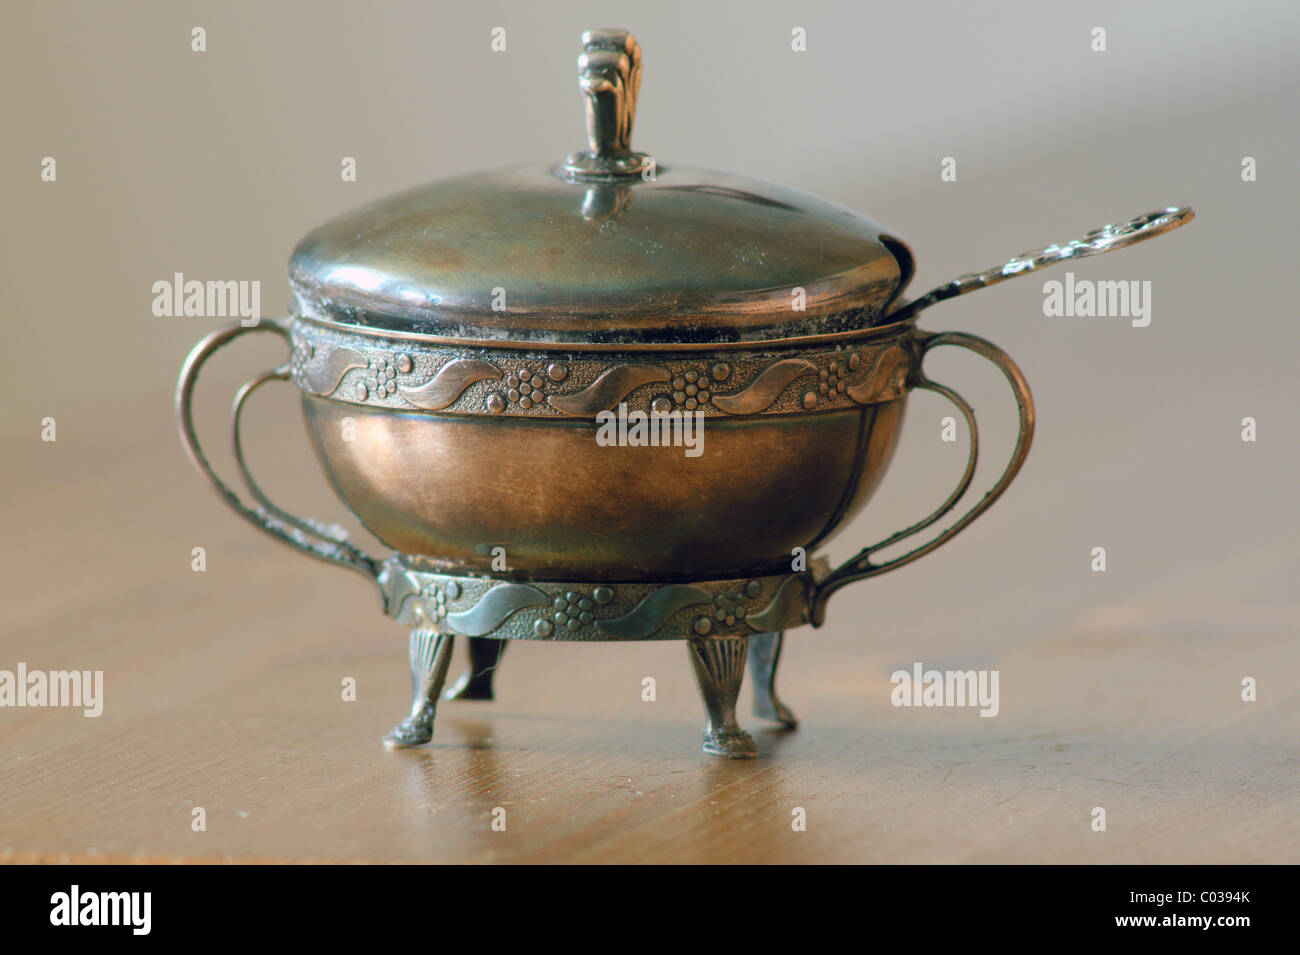 Old decorative metal sugar bowl Stock Photo